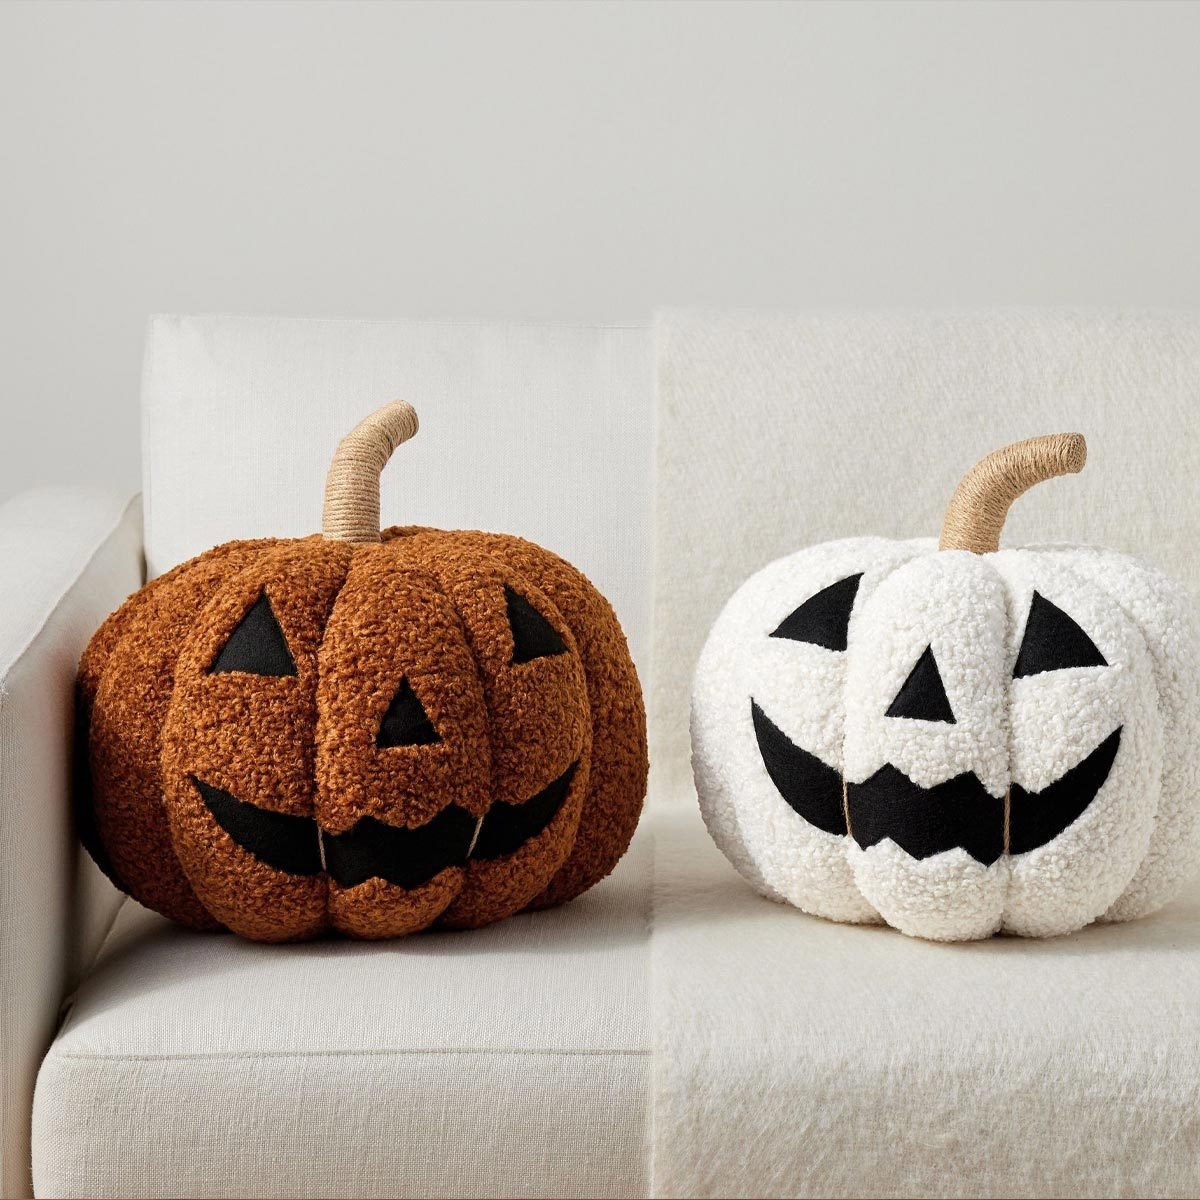 Scrub Daddy's Halloween Sponges Will Get You Feeling Spooky